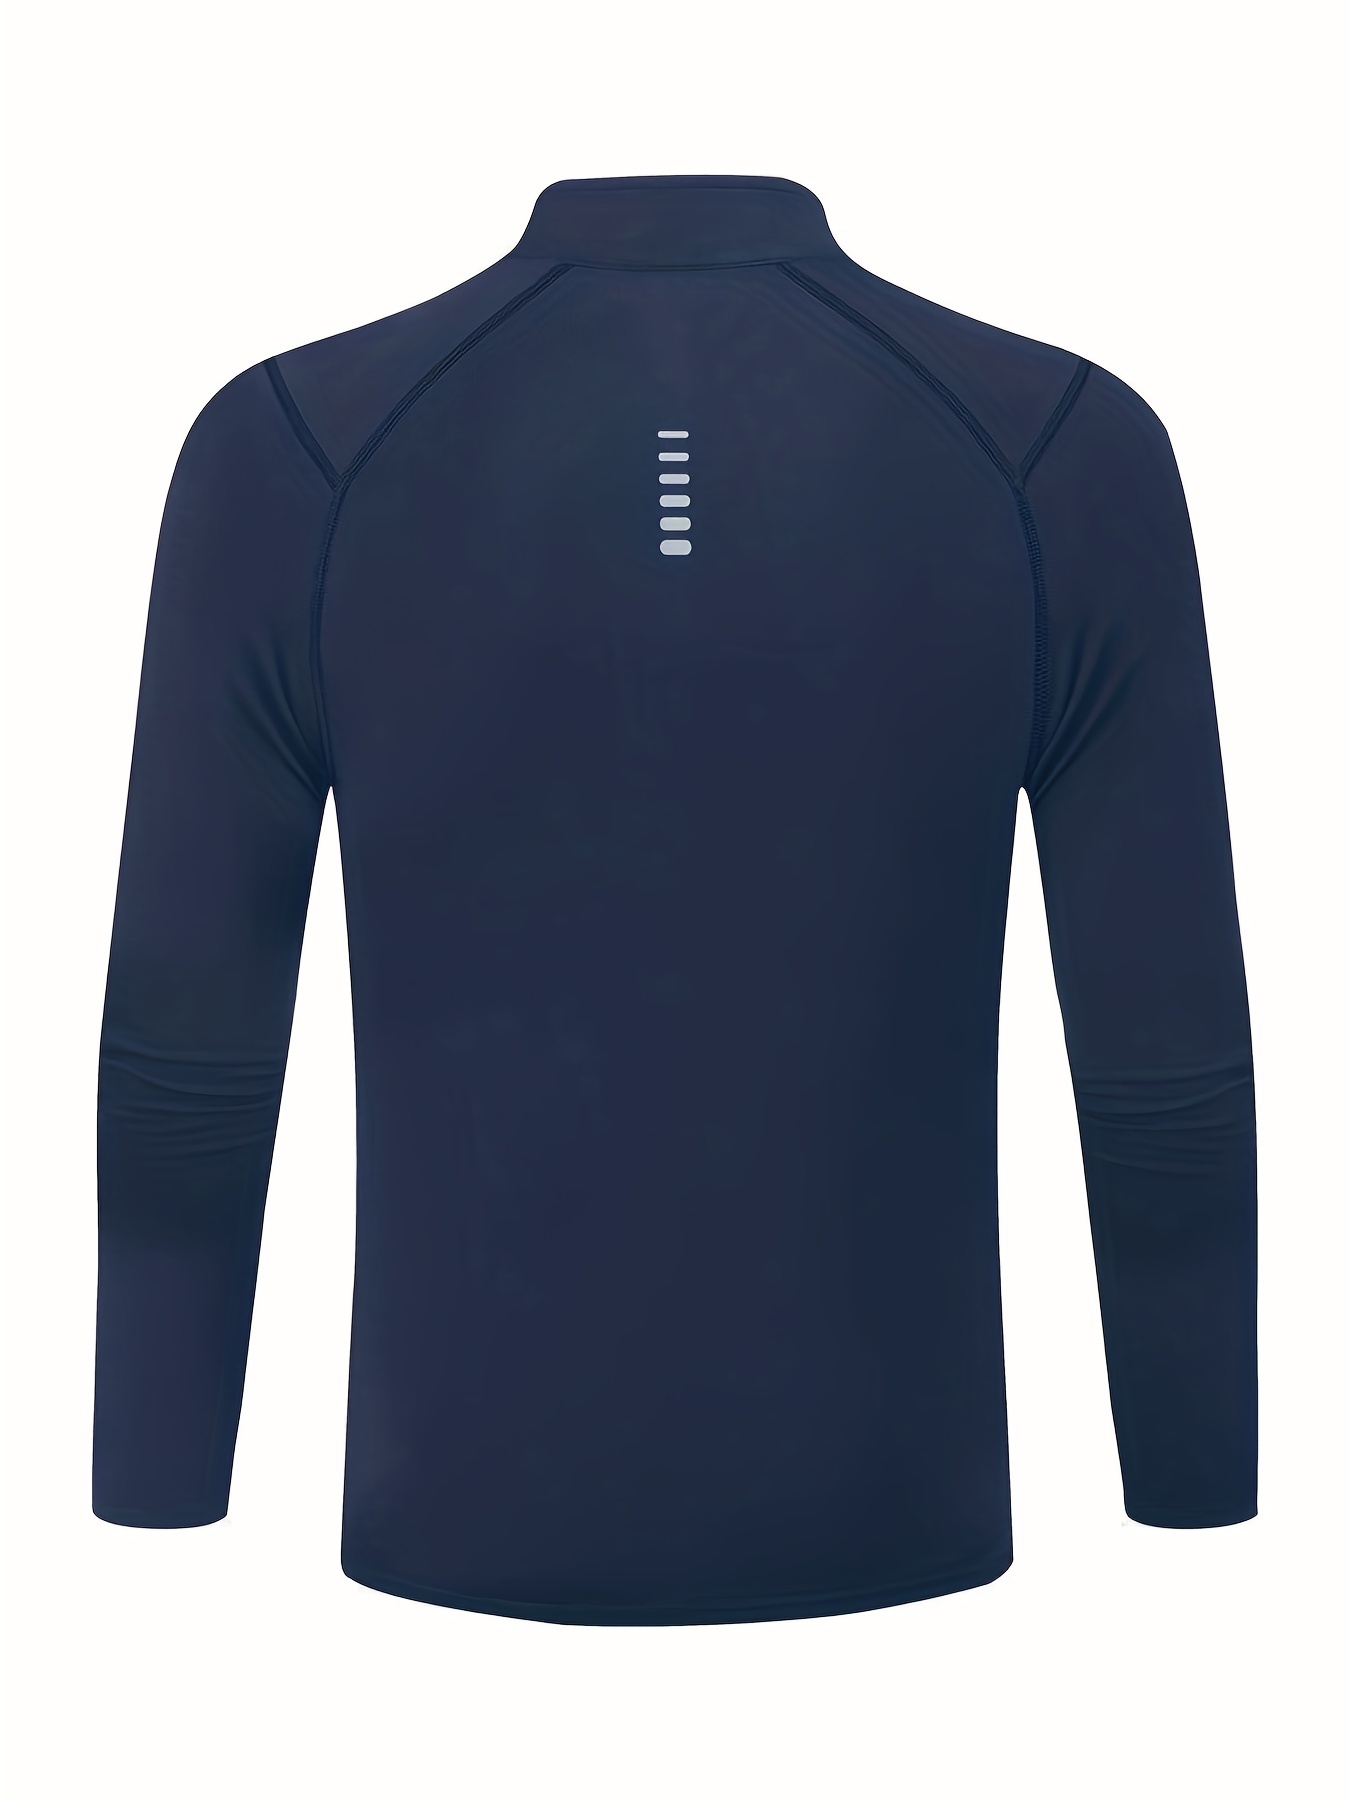 Men's Long-Sleeve Compression Shirt Base-Layer Running T-Shirts  Top(XX-Large, Raglan - Navy) 